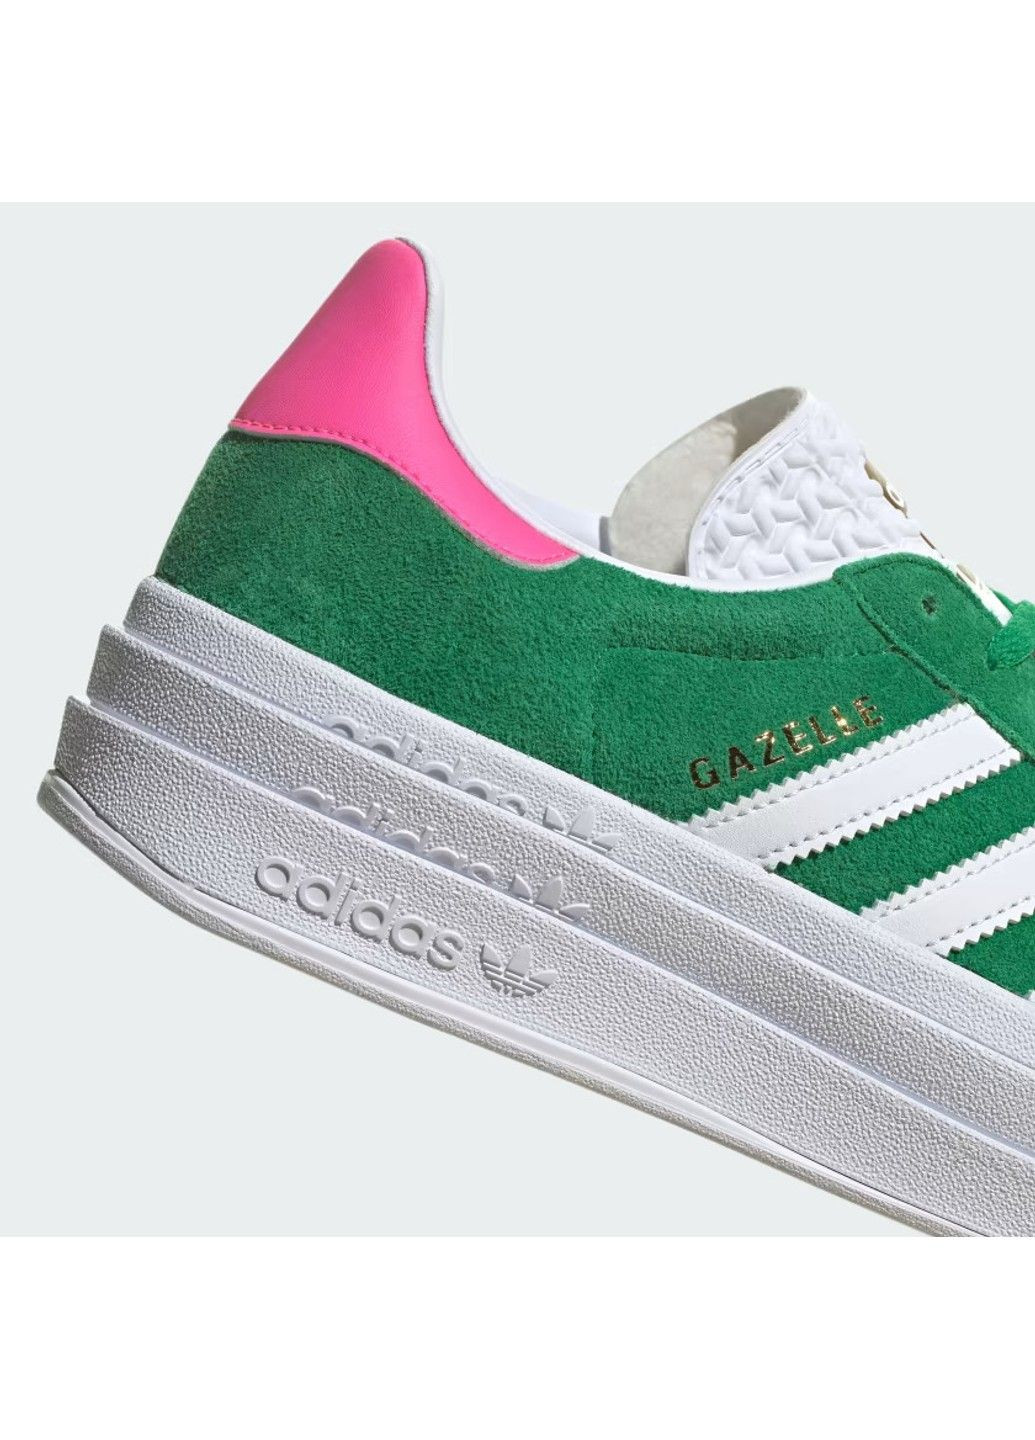 Зелені осінні gazelle bold green lucid pink wmns adidas IG3136